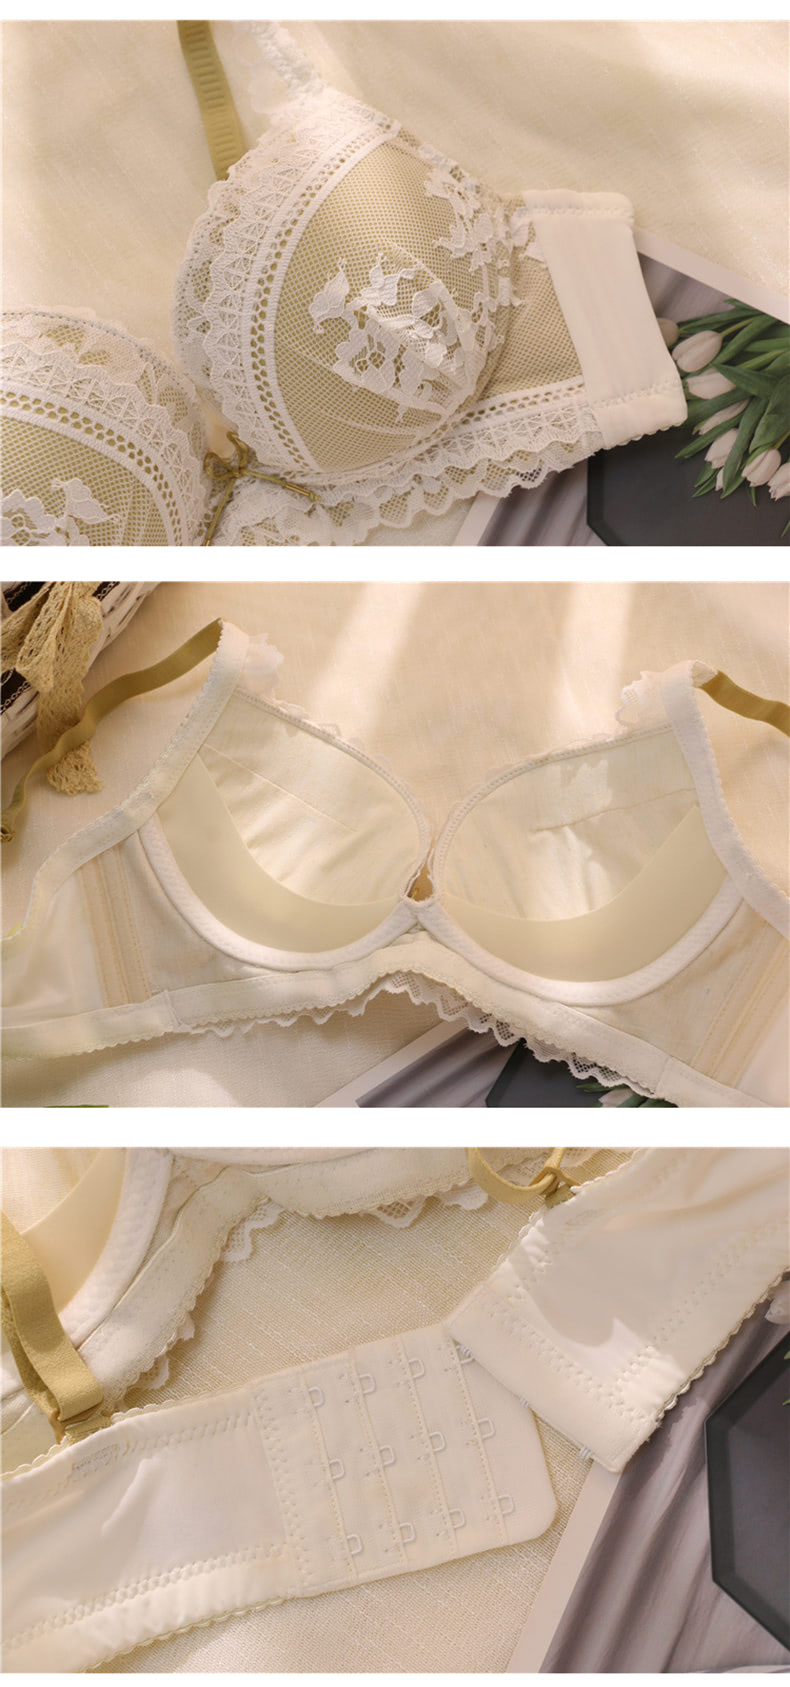 Soft-Lace-Bralette-Panty-Lingerie-Set-Everyday-Comfort-Underwear20.jpg